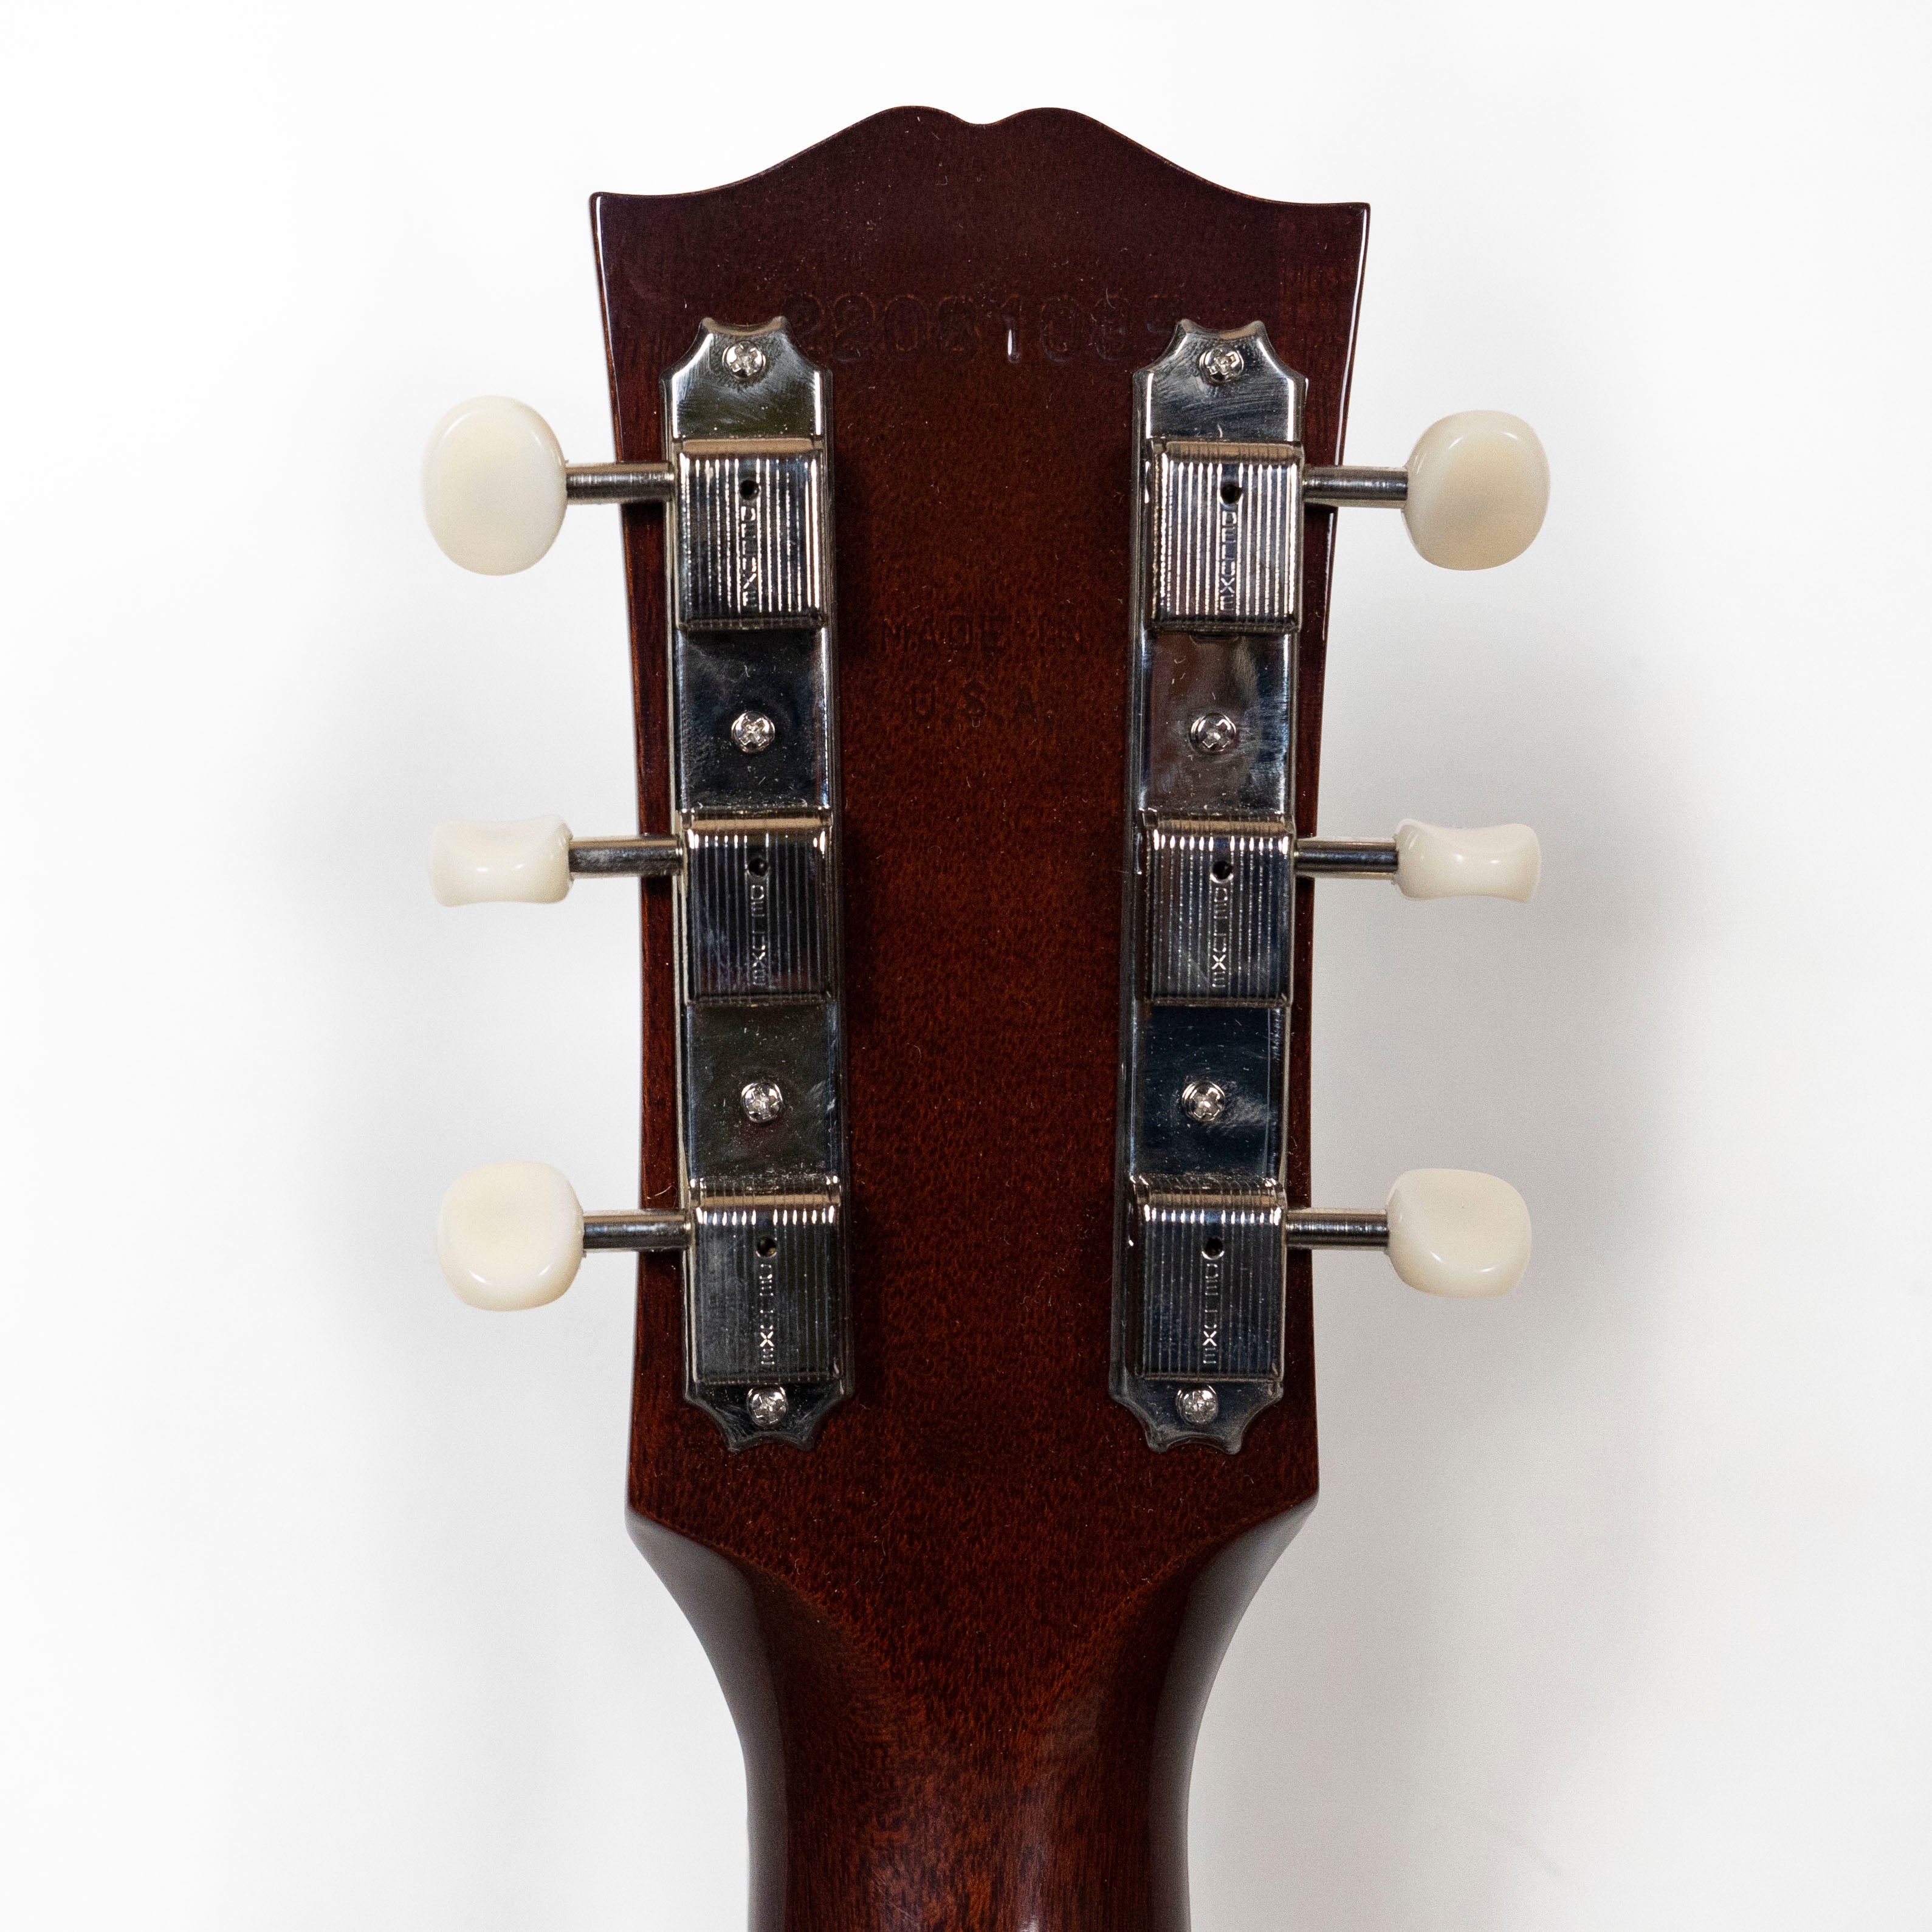 Gibson 2021 J-45 1950's Sunburst